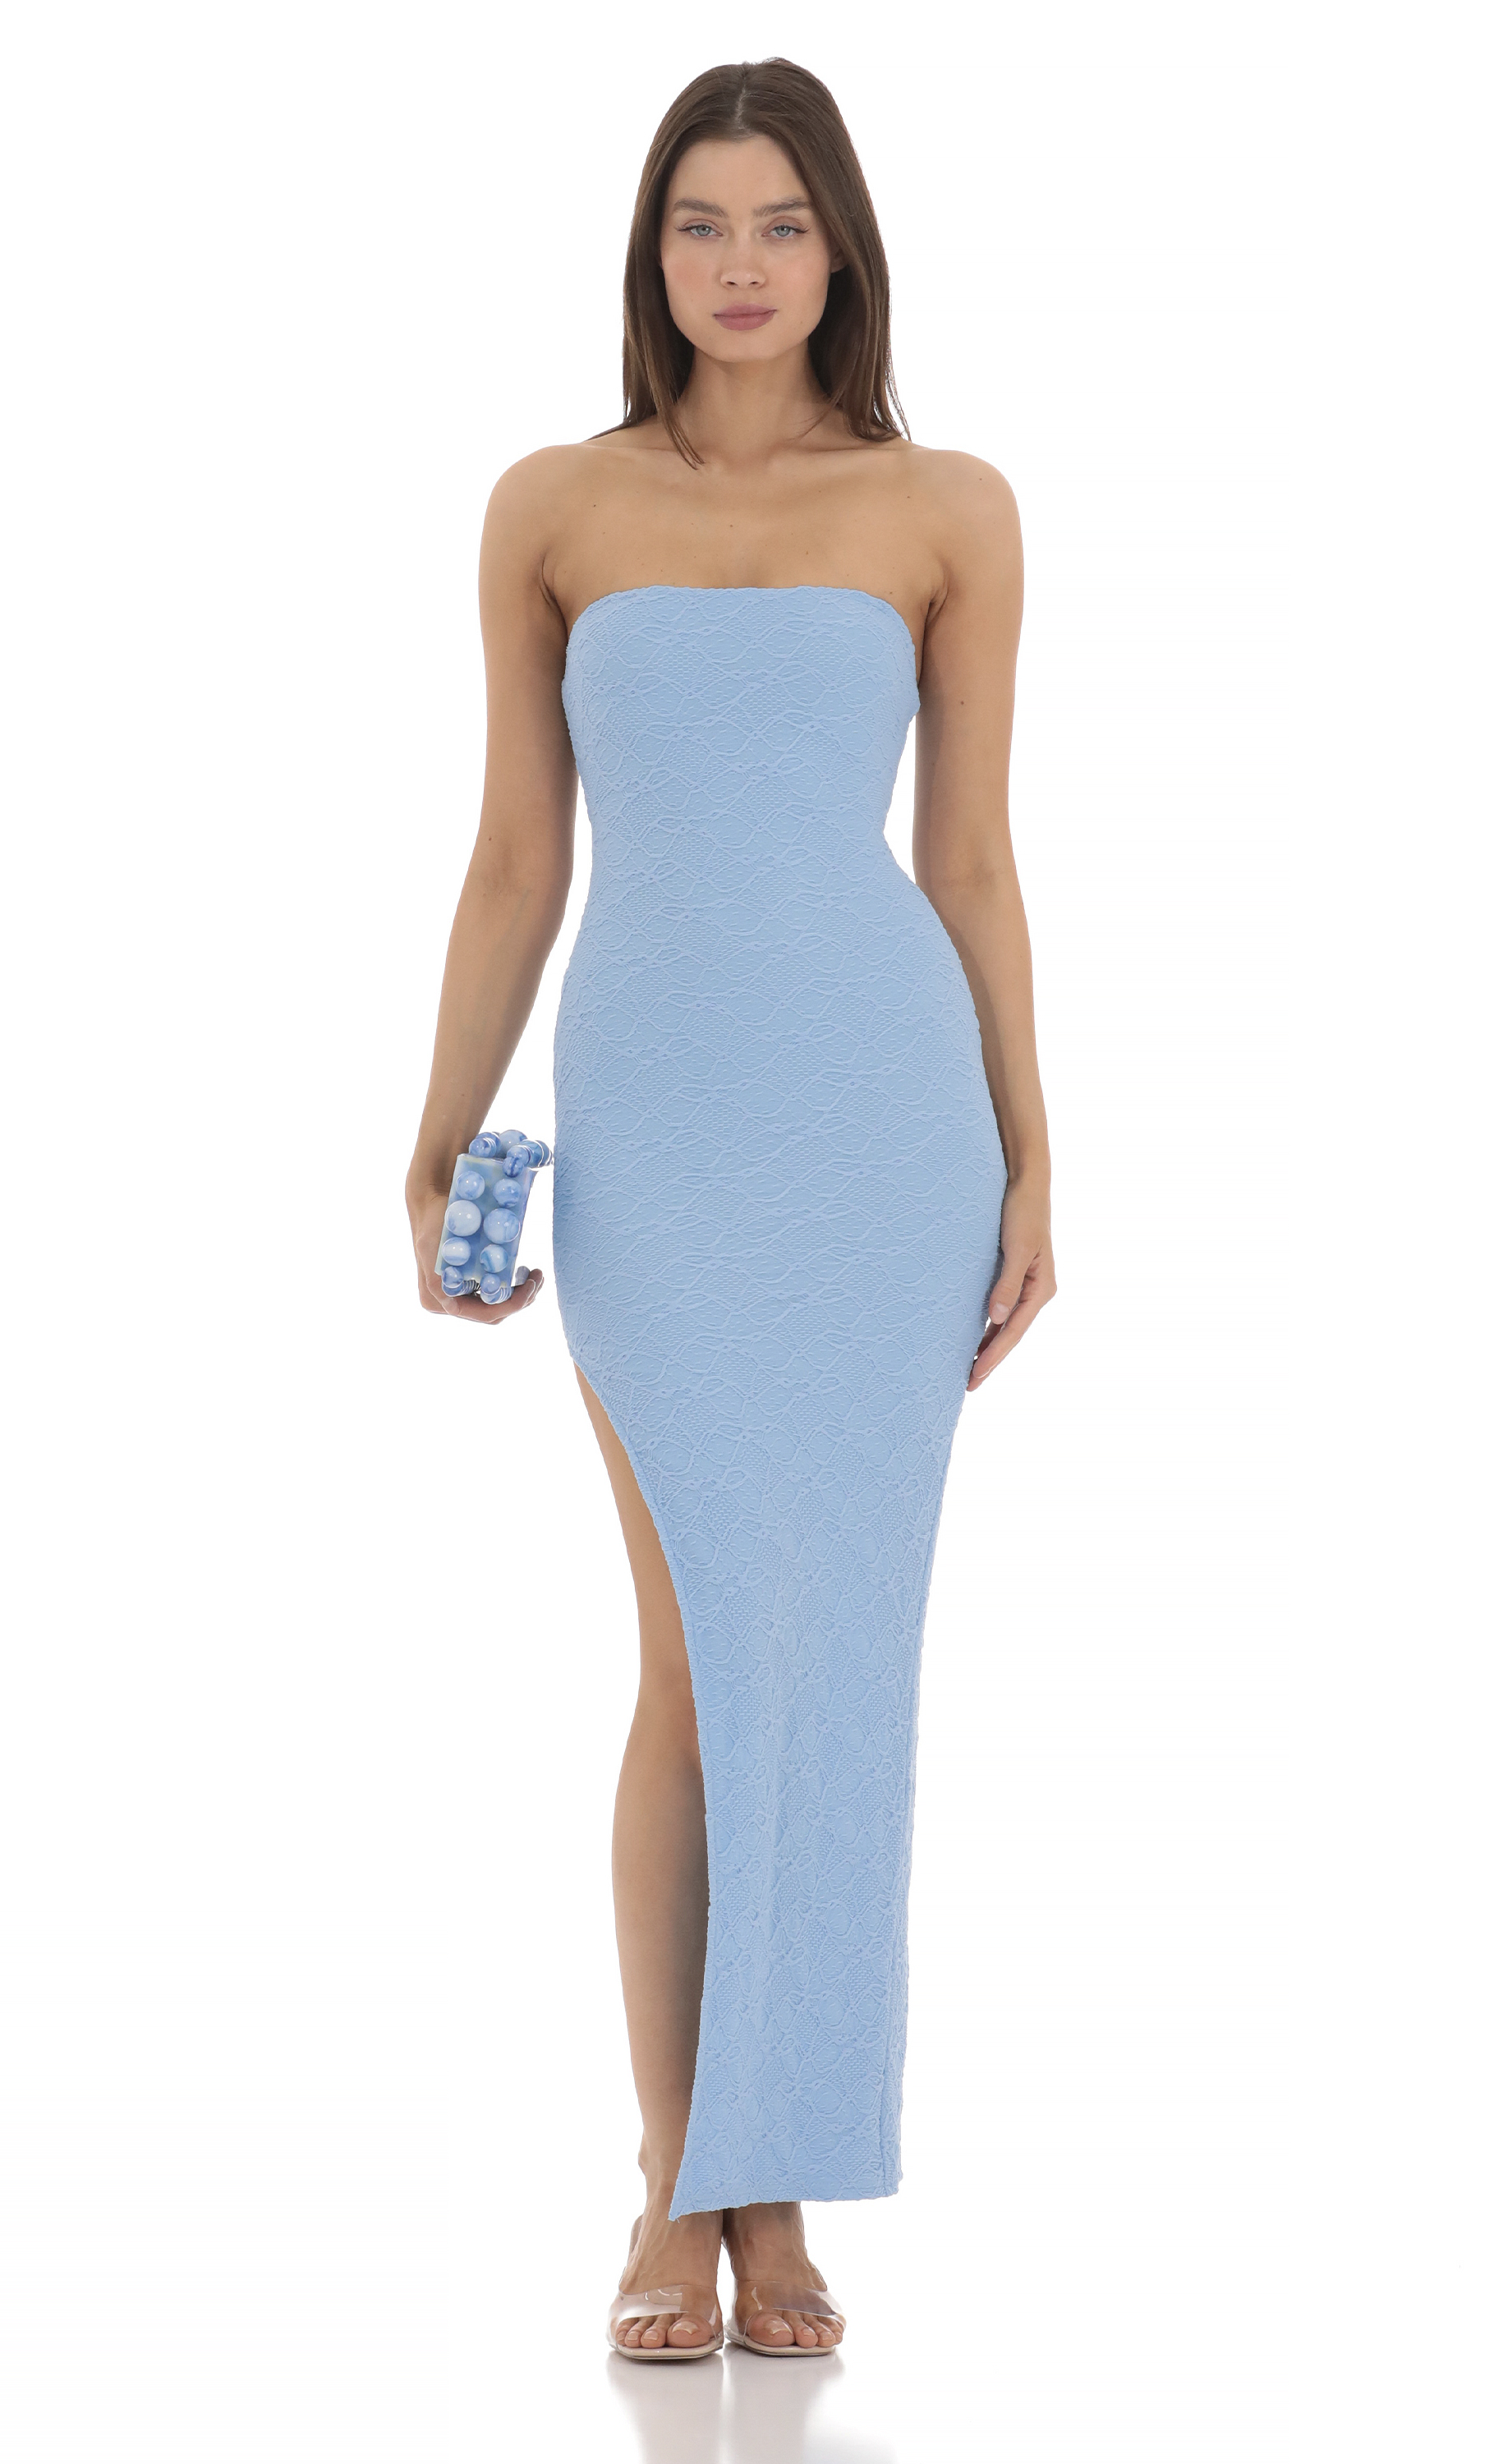 Textured Bodycon Dress in Light Blue